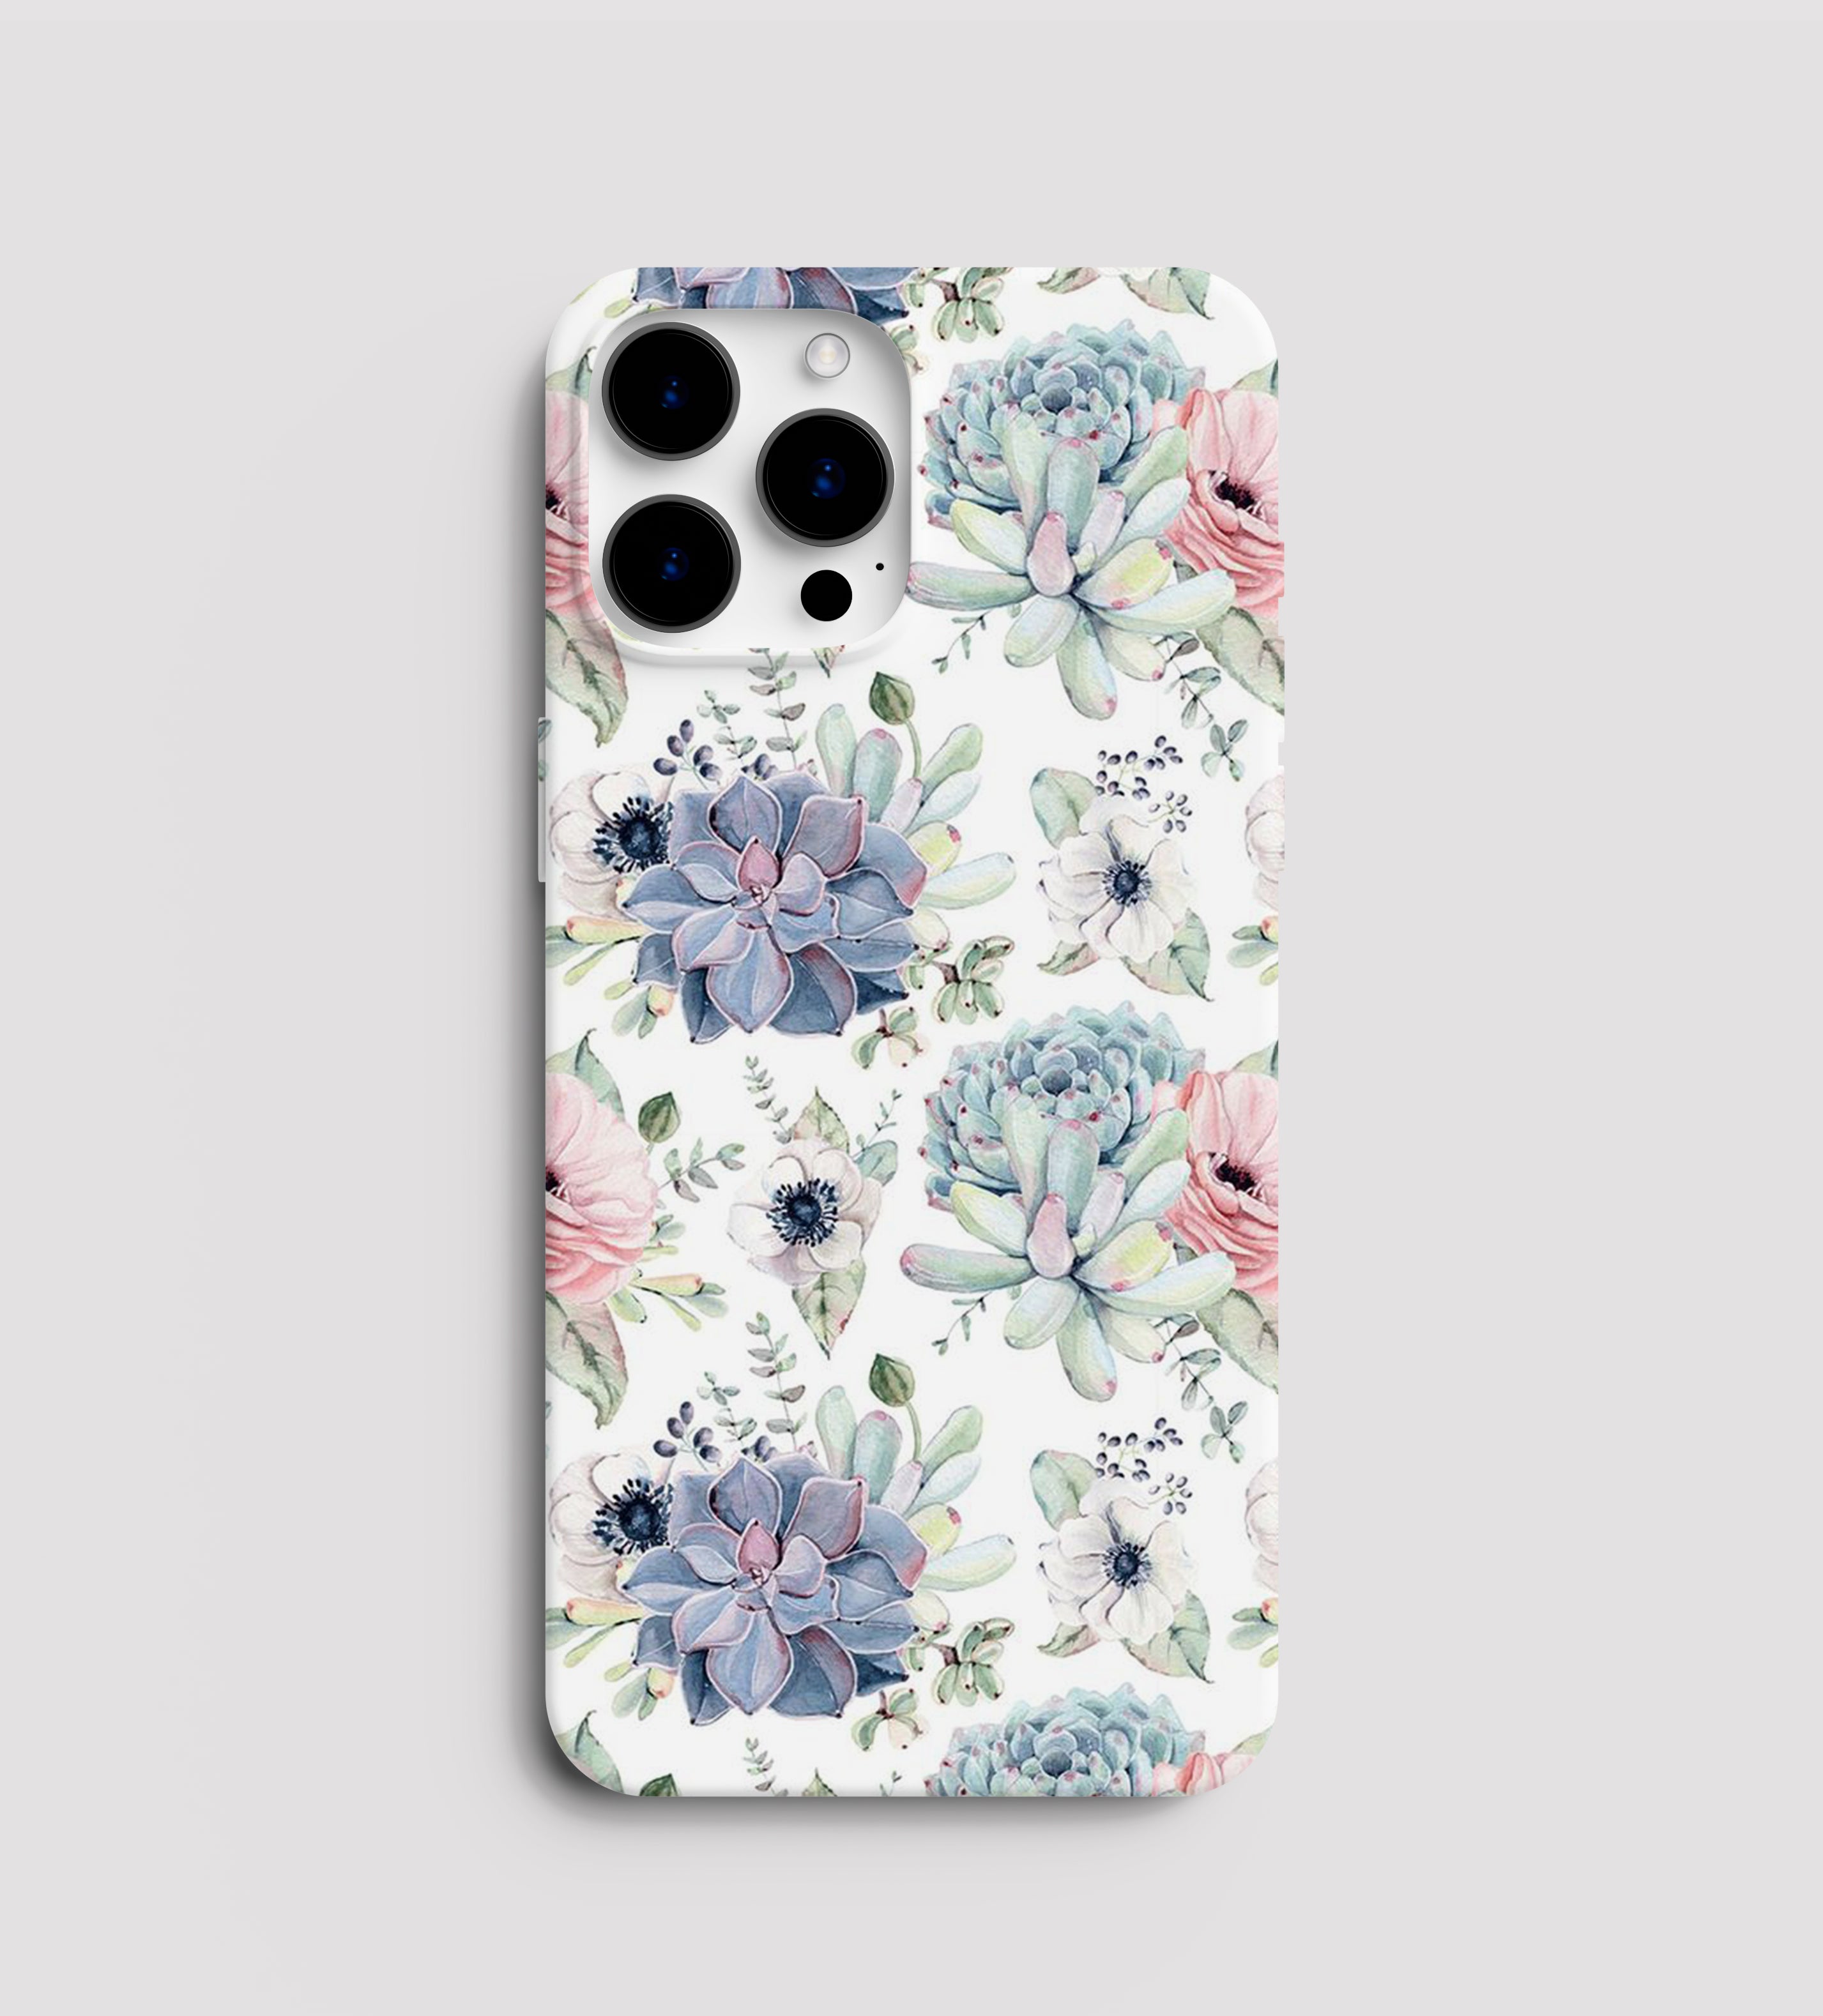 Hipster Flower Mobile Case - Seek Creation